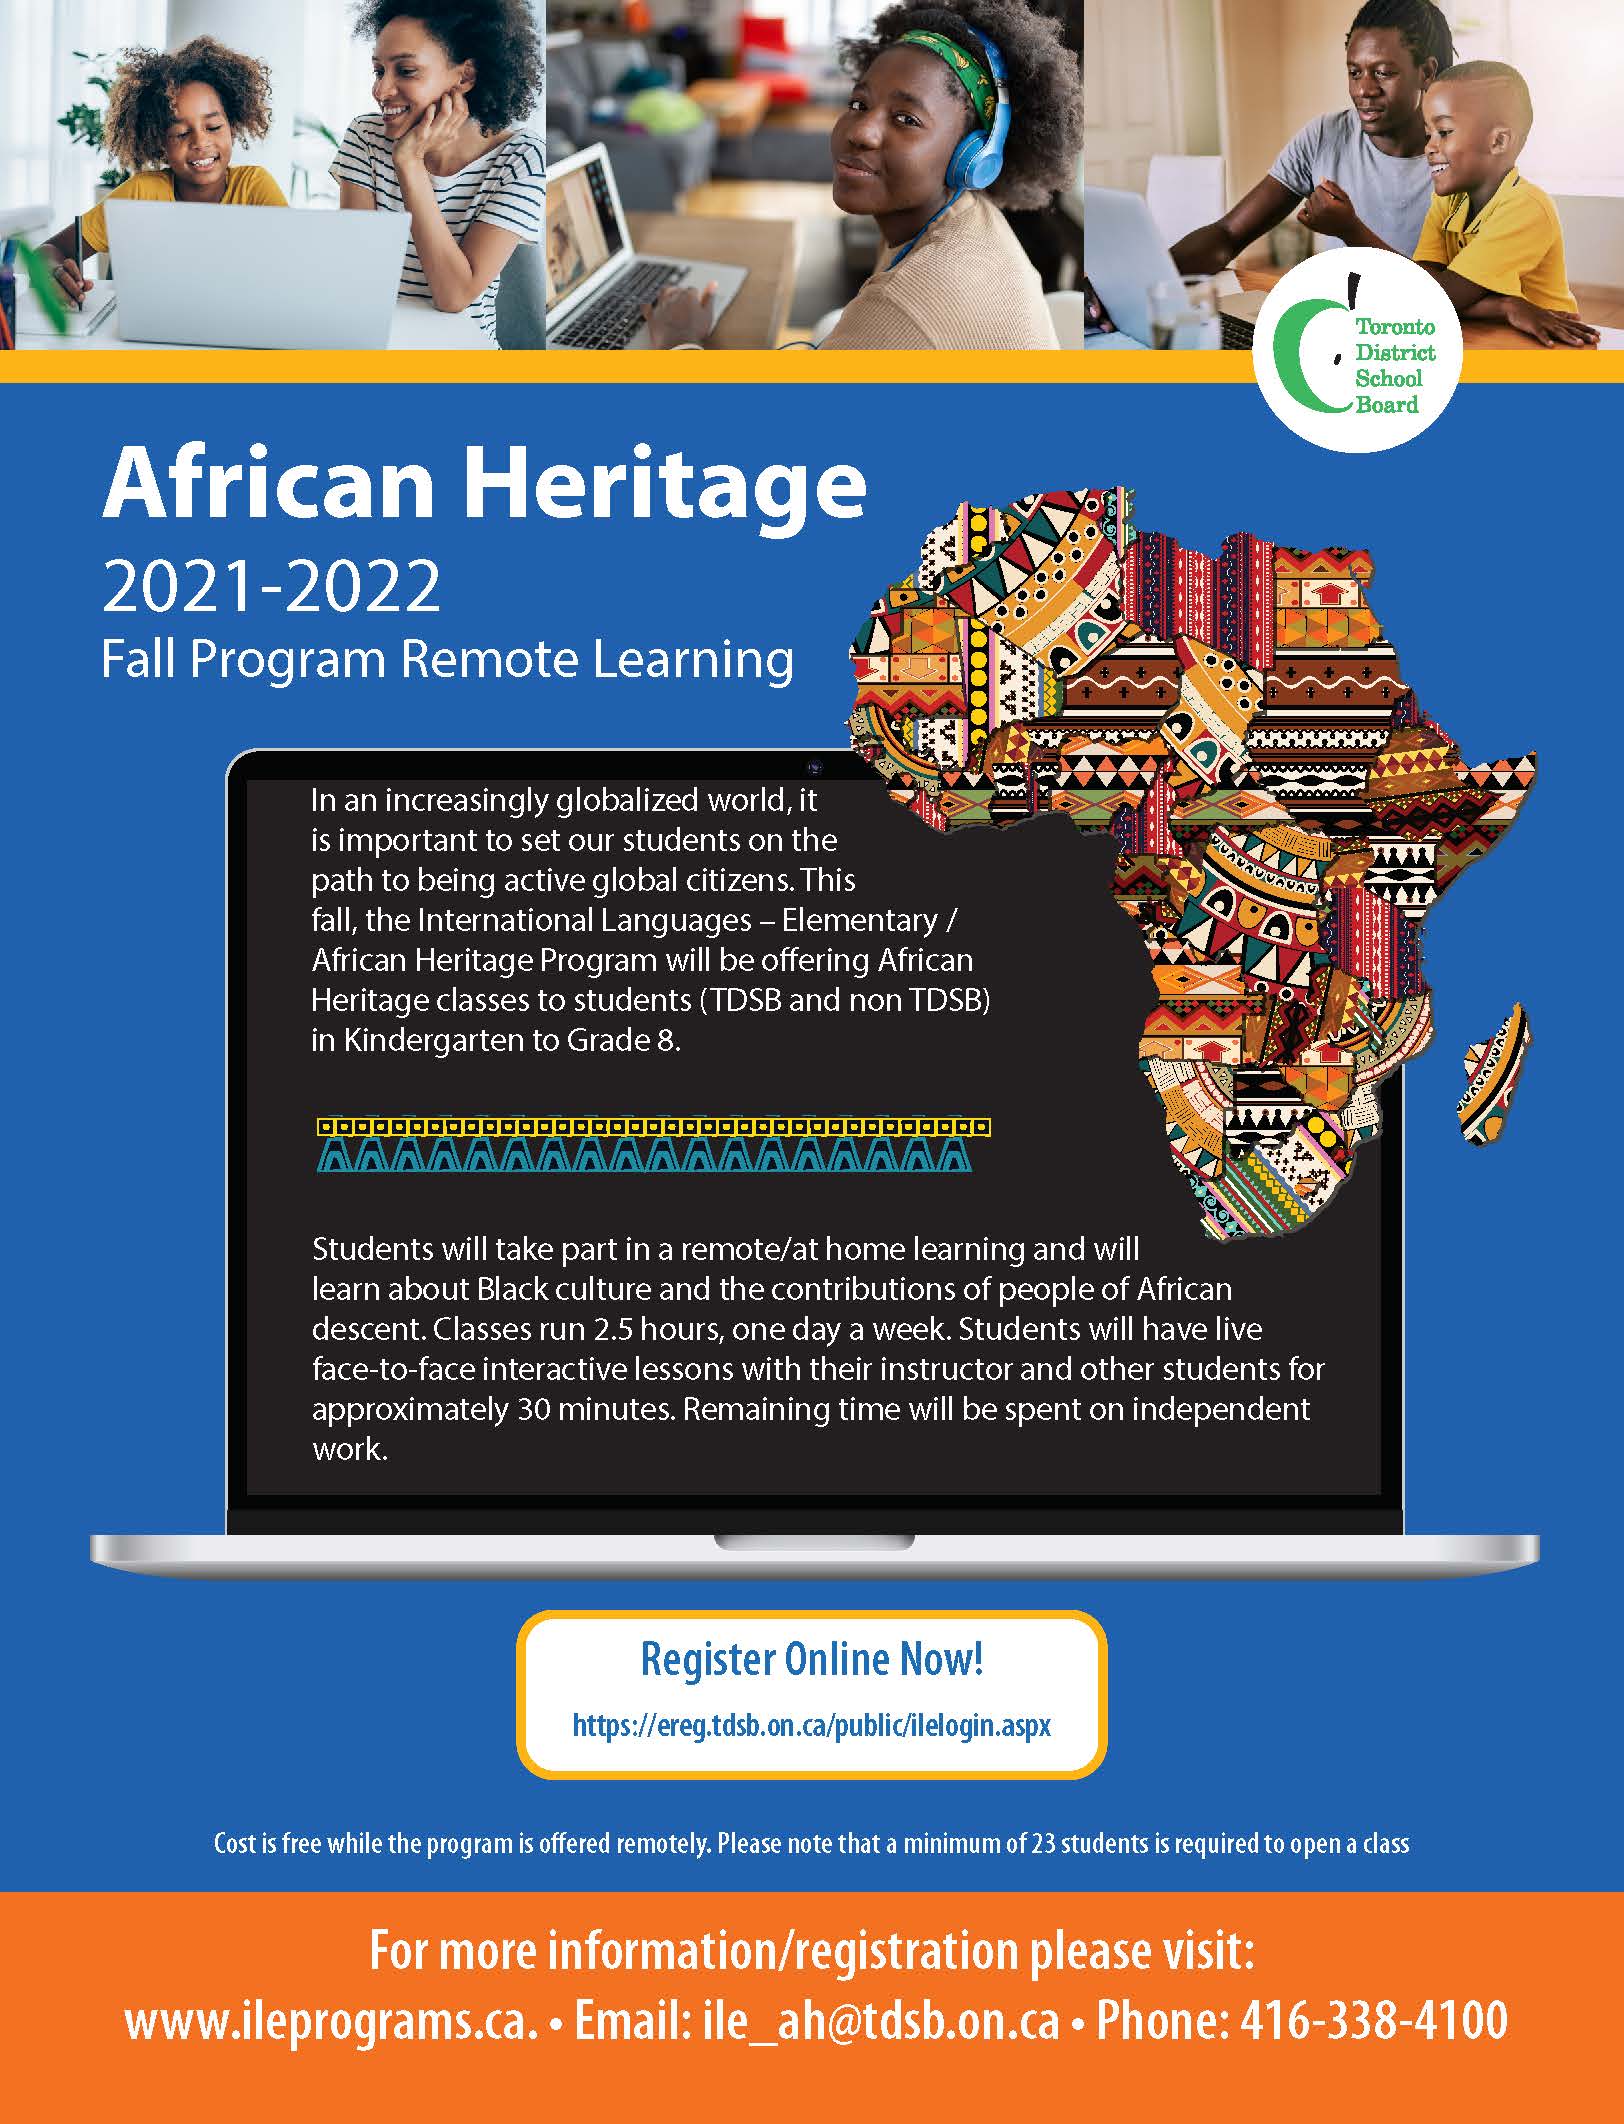 AfricanHeritage_Flyer